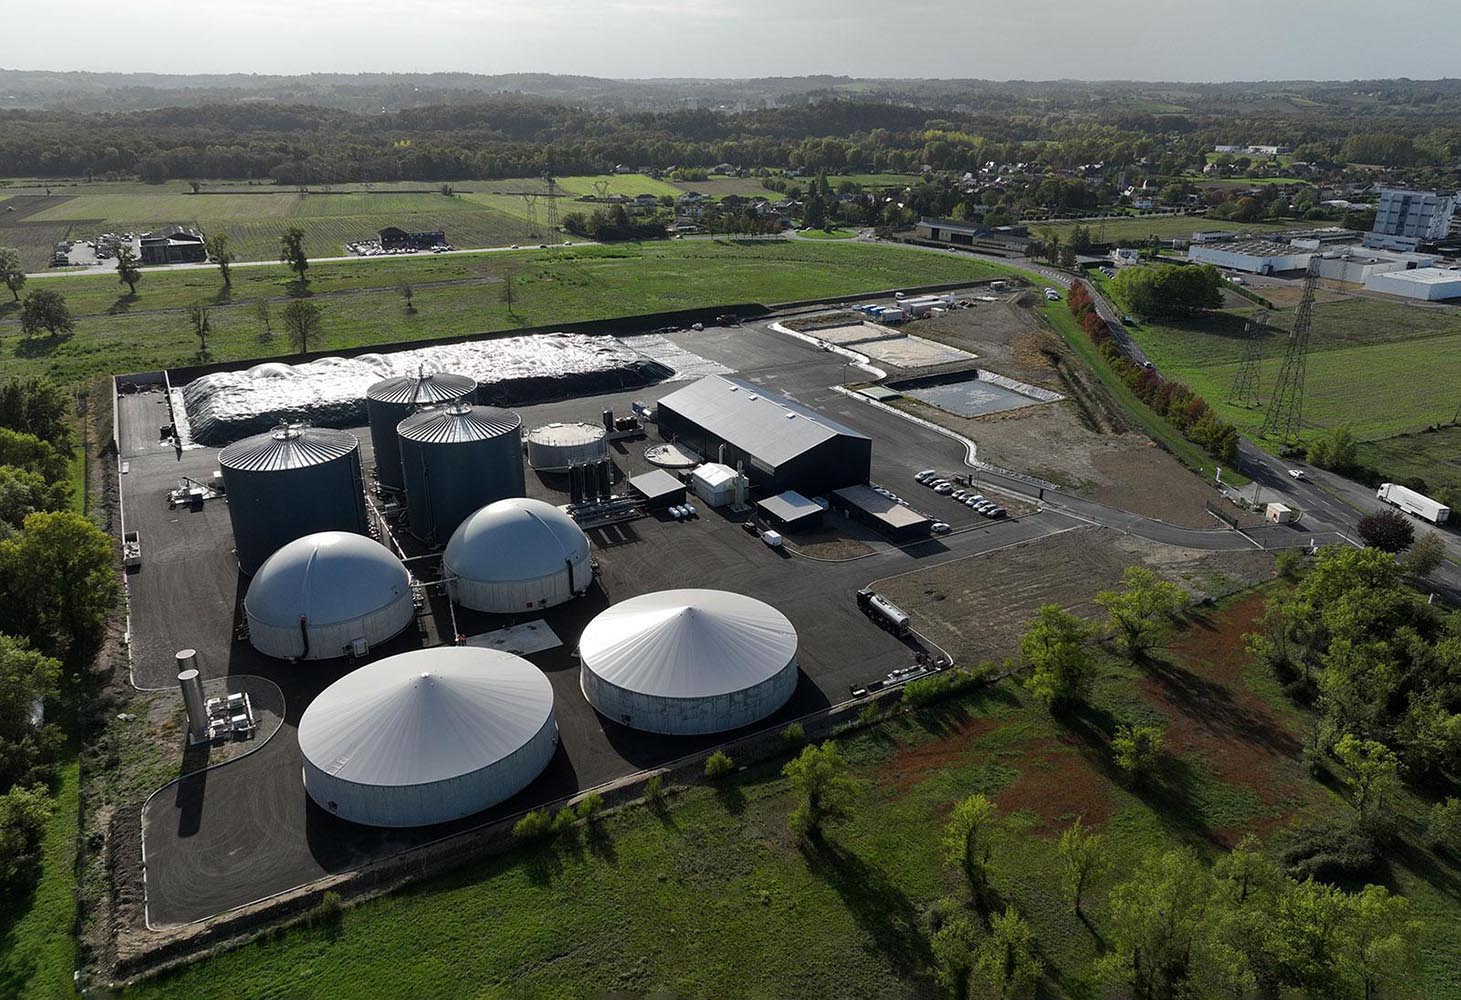 TotalEnergies commissions France’s largest biogas unit